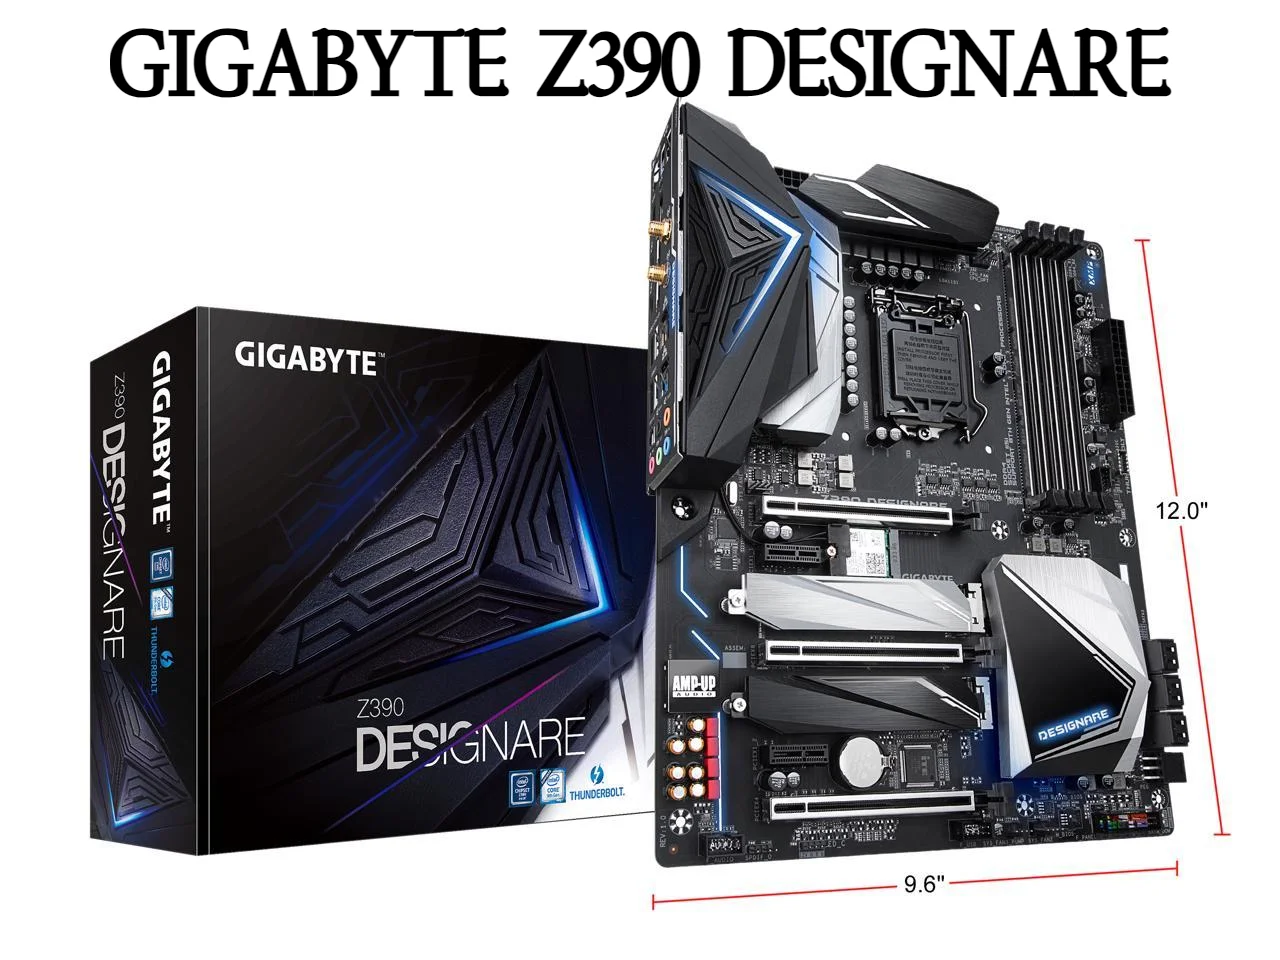 

GIGABYTE Z390 DESIGNARE Motherboard Gaming LGA 1151 Intel Z390 HDMI SATA 6Gb/s USB 3.1 ATX Thunderbolt 3 Desktop placa mae